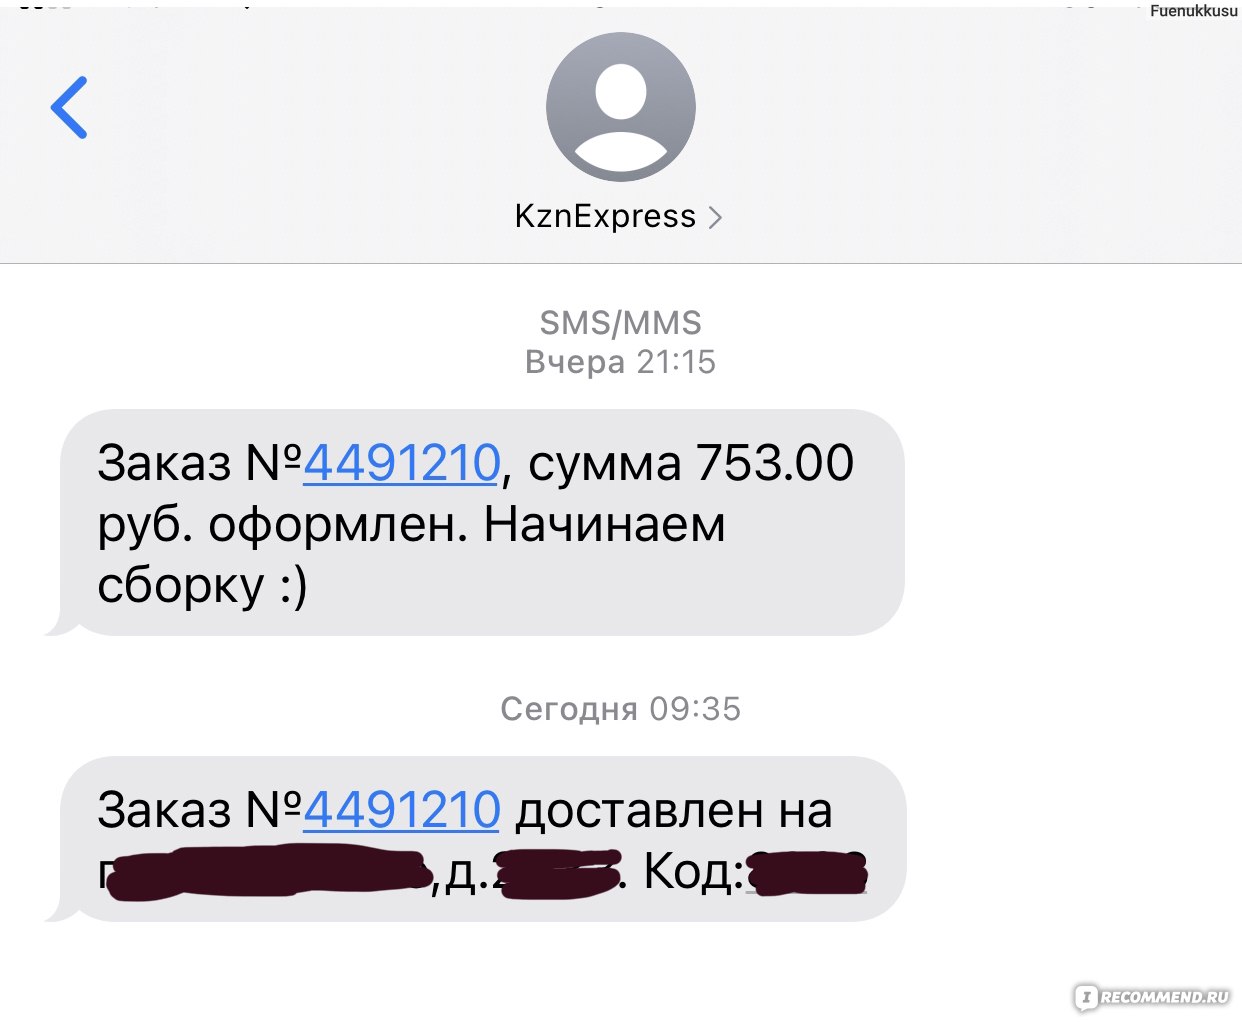 Казанэкспресс Ру Интернет Магазин Каталог